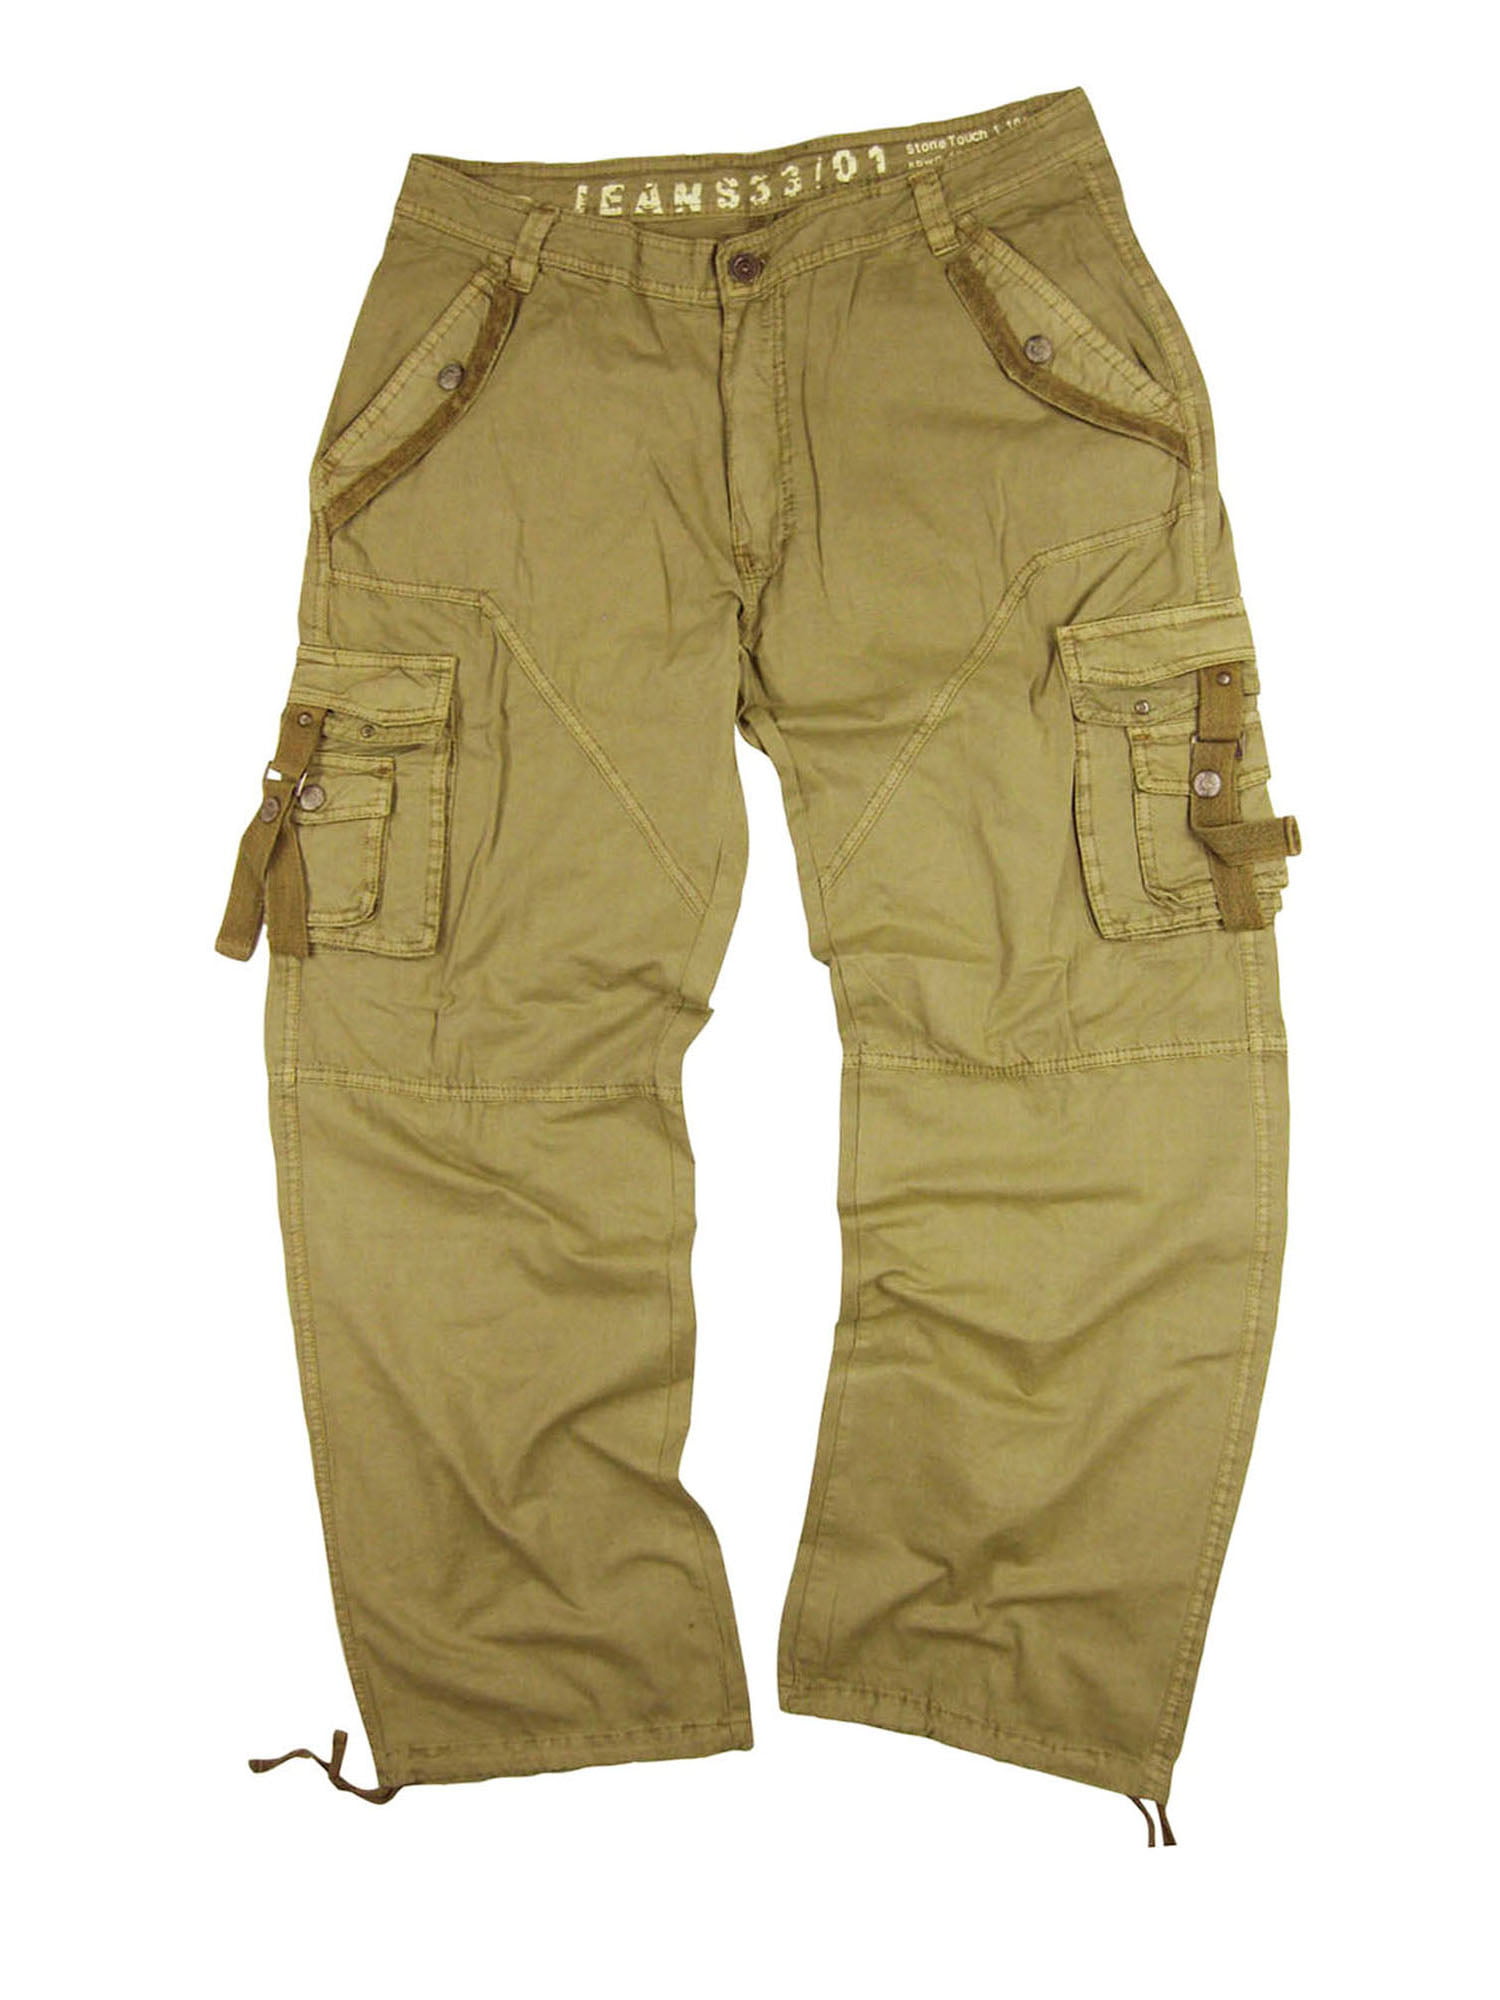 StoneTouch #A8- Men's Military-Style Cargo Pants 34x34--Khaki - Walmart.com